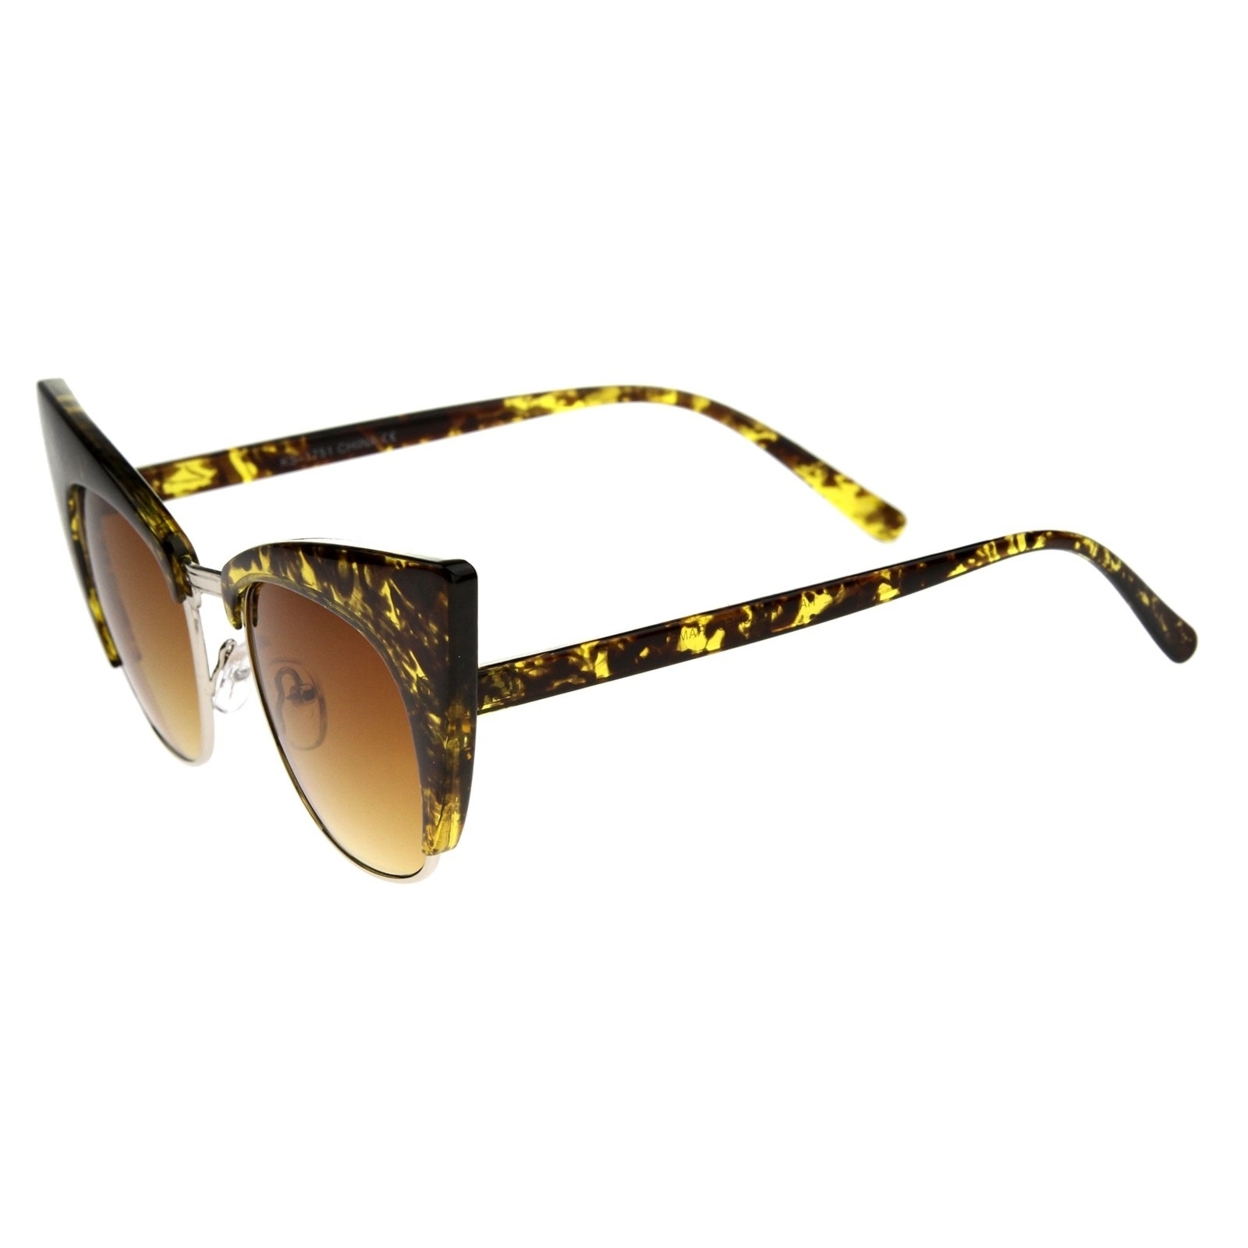 Women's High Fashion Half Frame Bold Square Cat Eye Sunglasses 50mm - Yellow-Tortoise / Amber